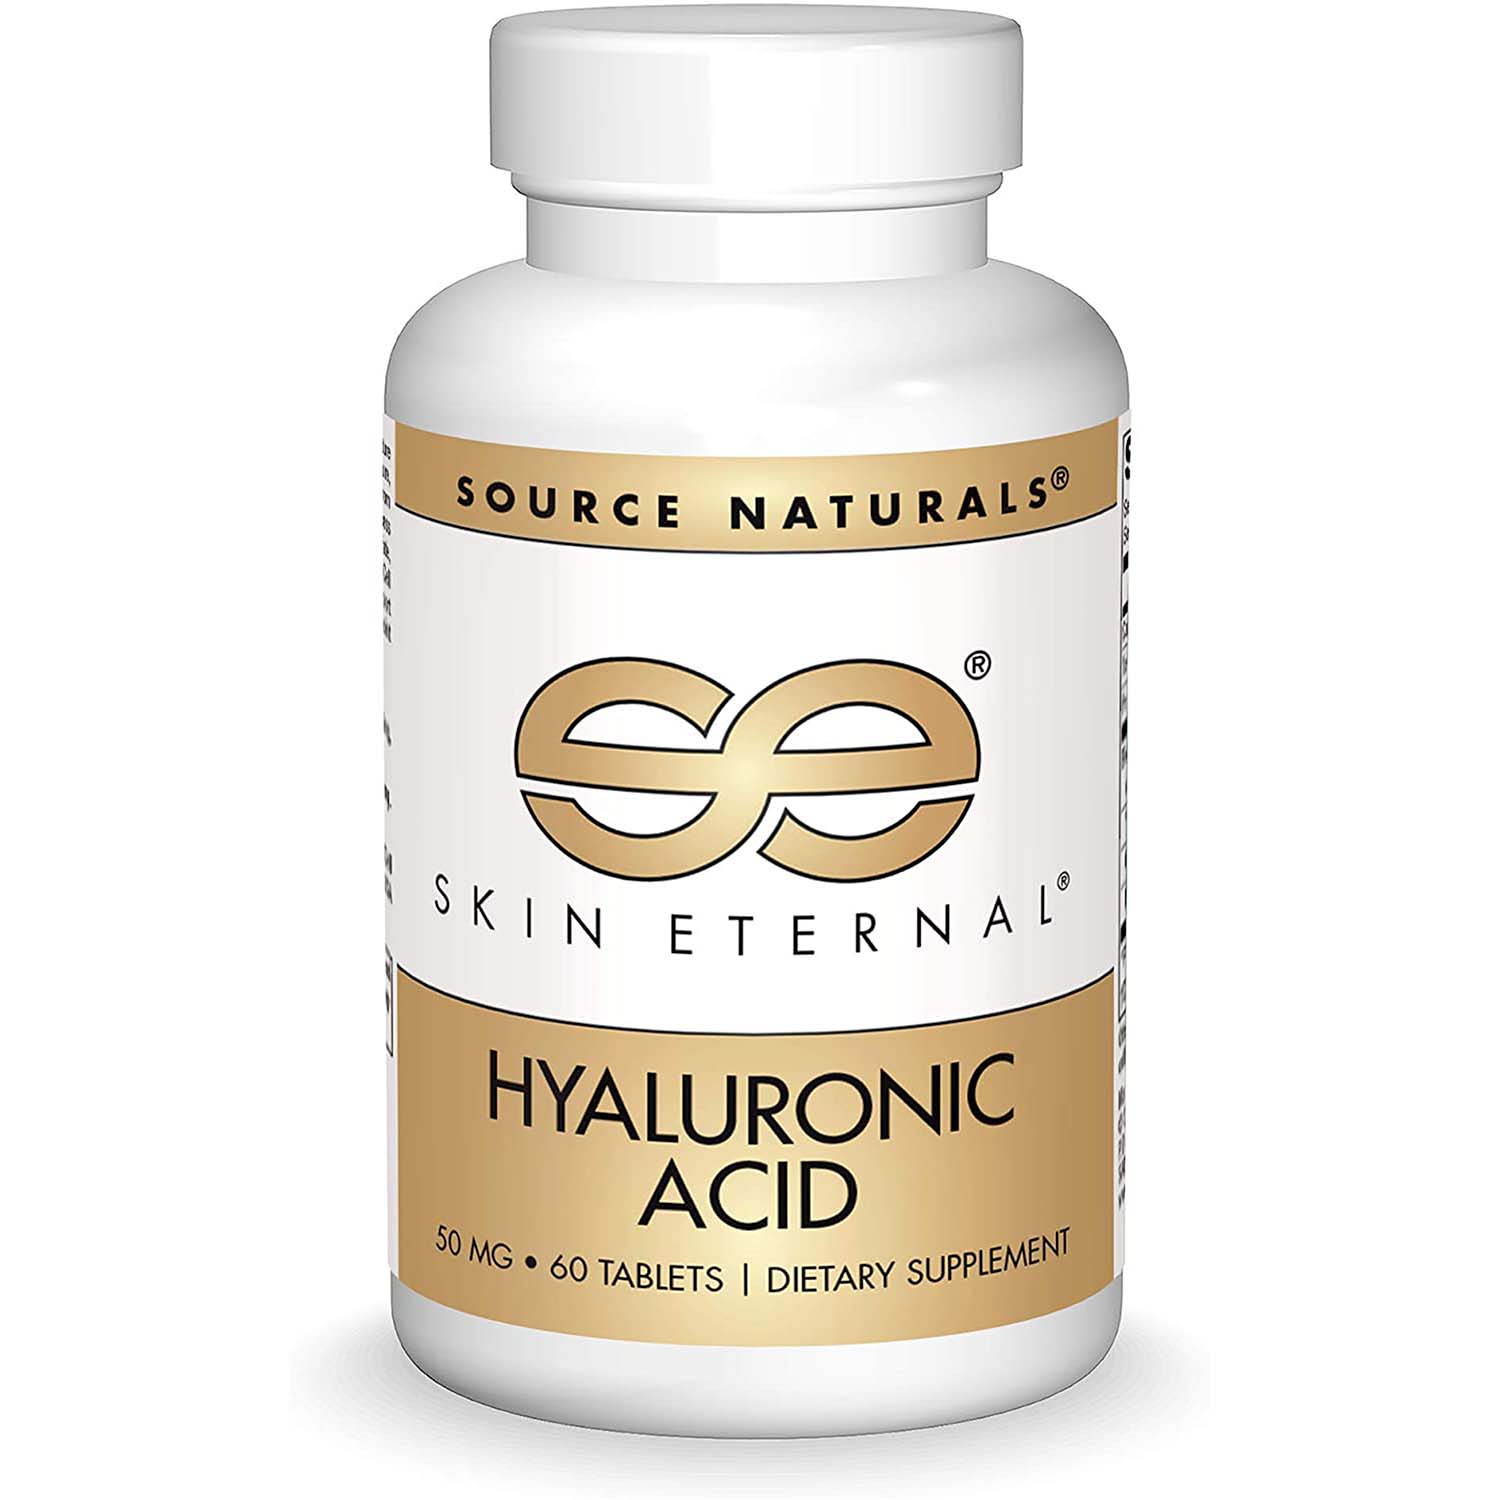 Source Naturals Skin Eternal Hyaluronic Acid, 50 mg, 60 Tablets